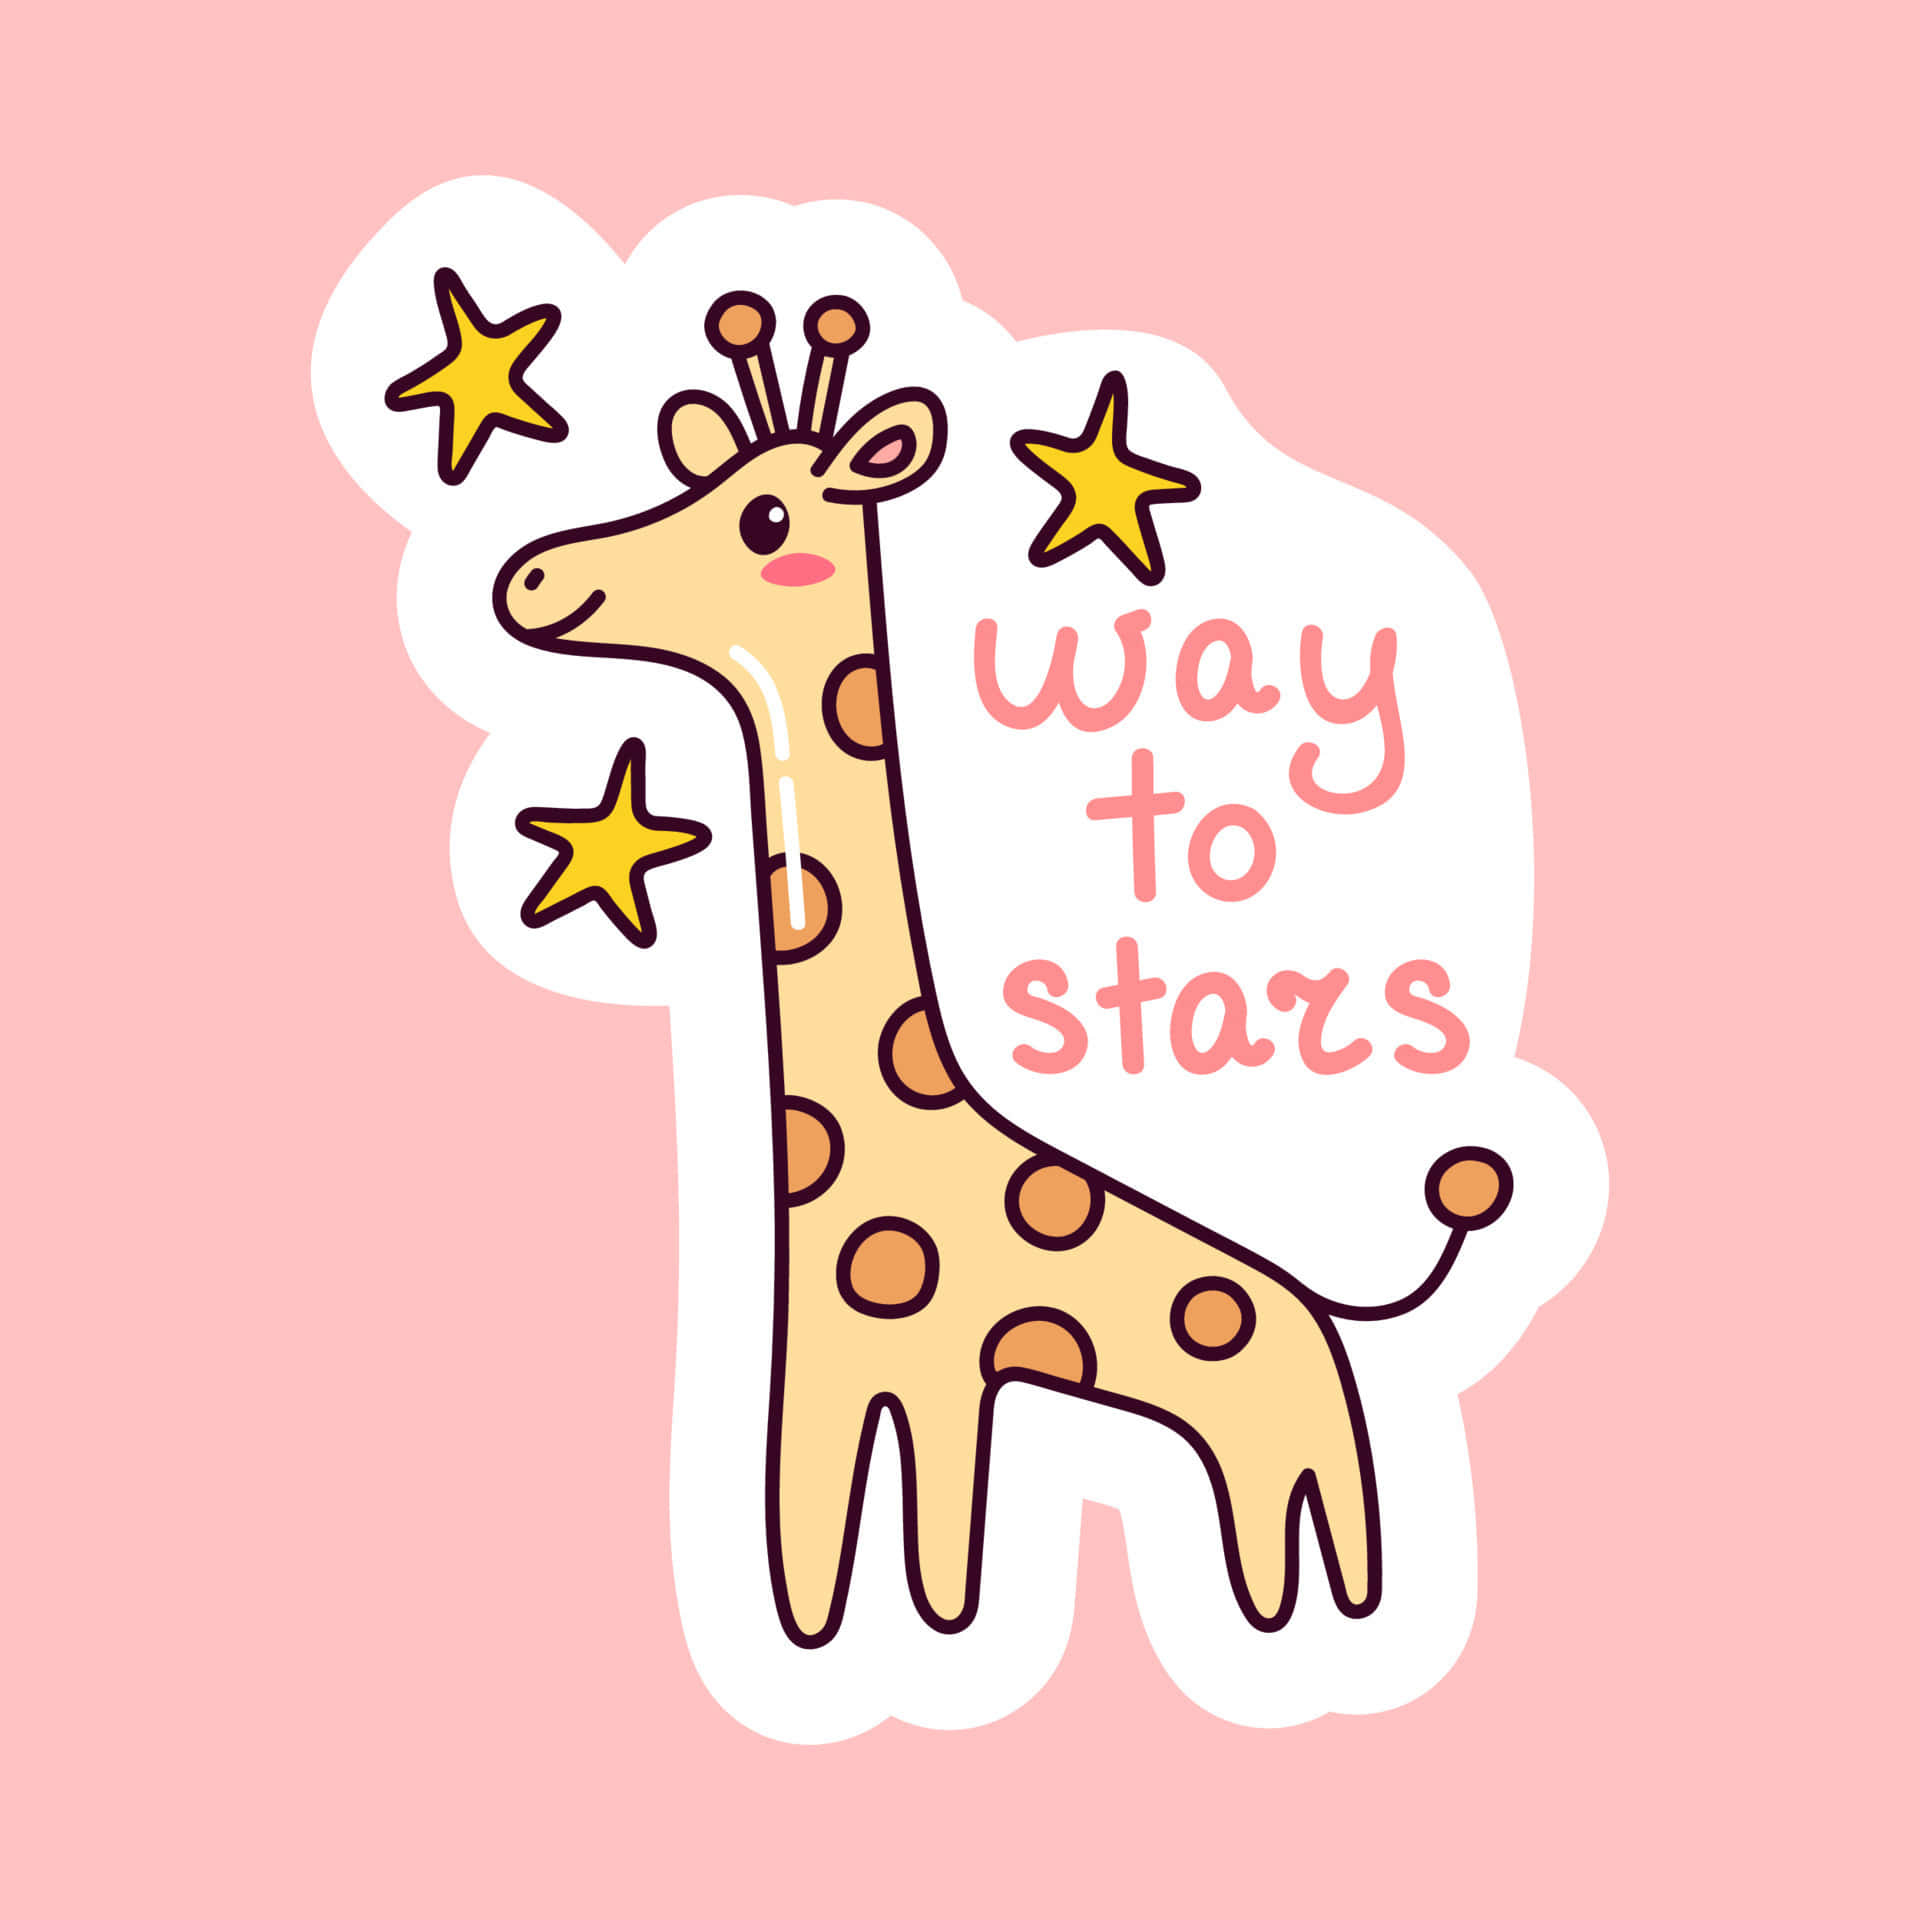 Adorable Kawaii Giraffe with a Friendly Smile Wallpaper